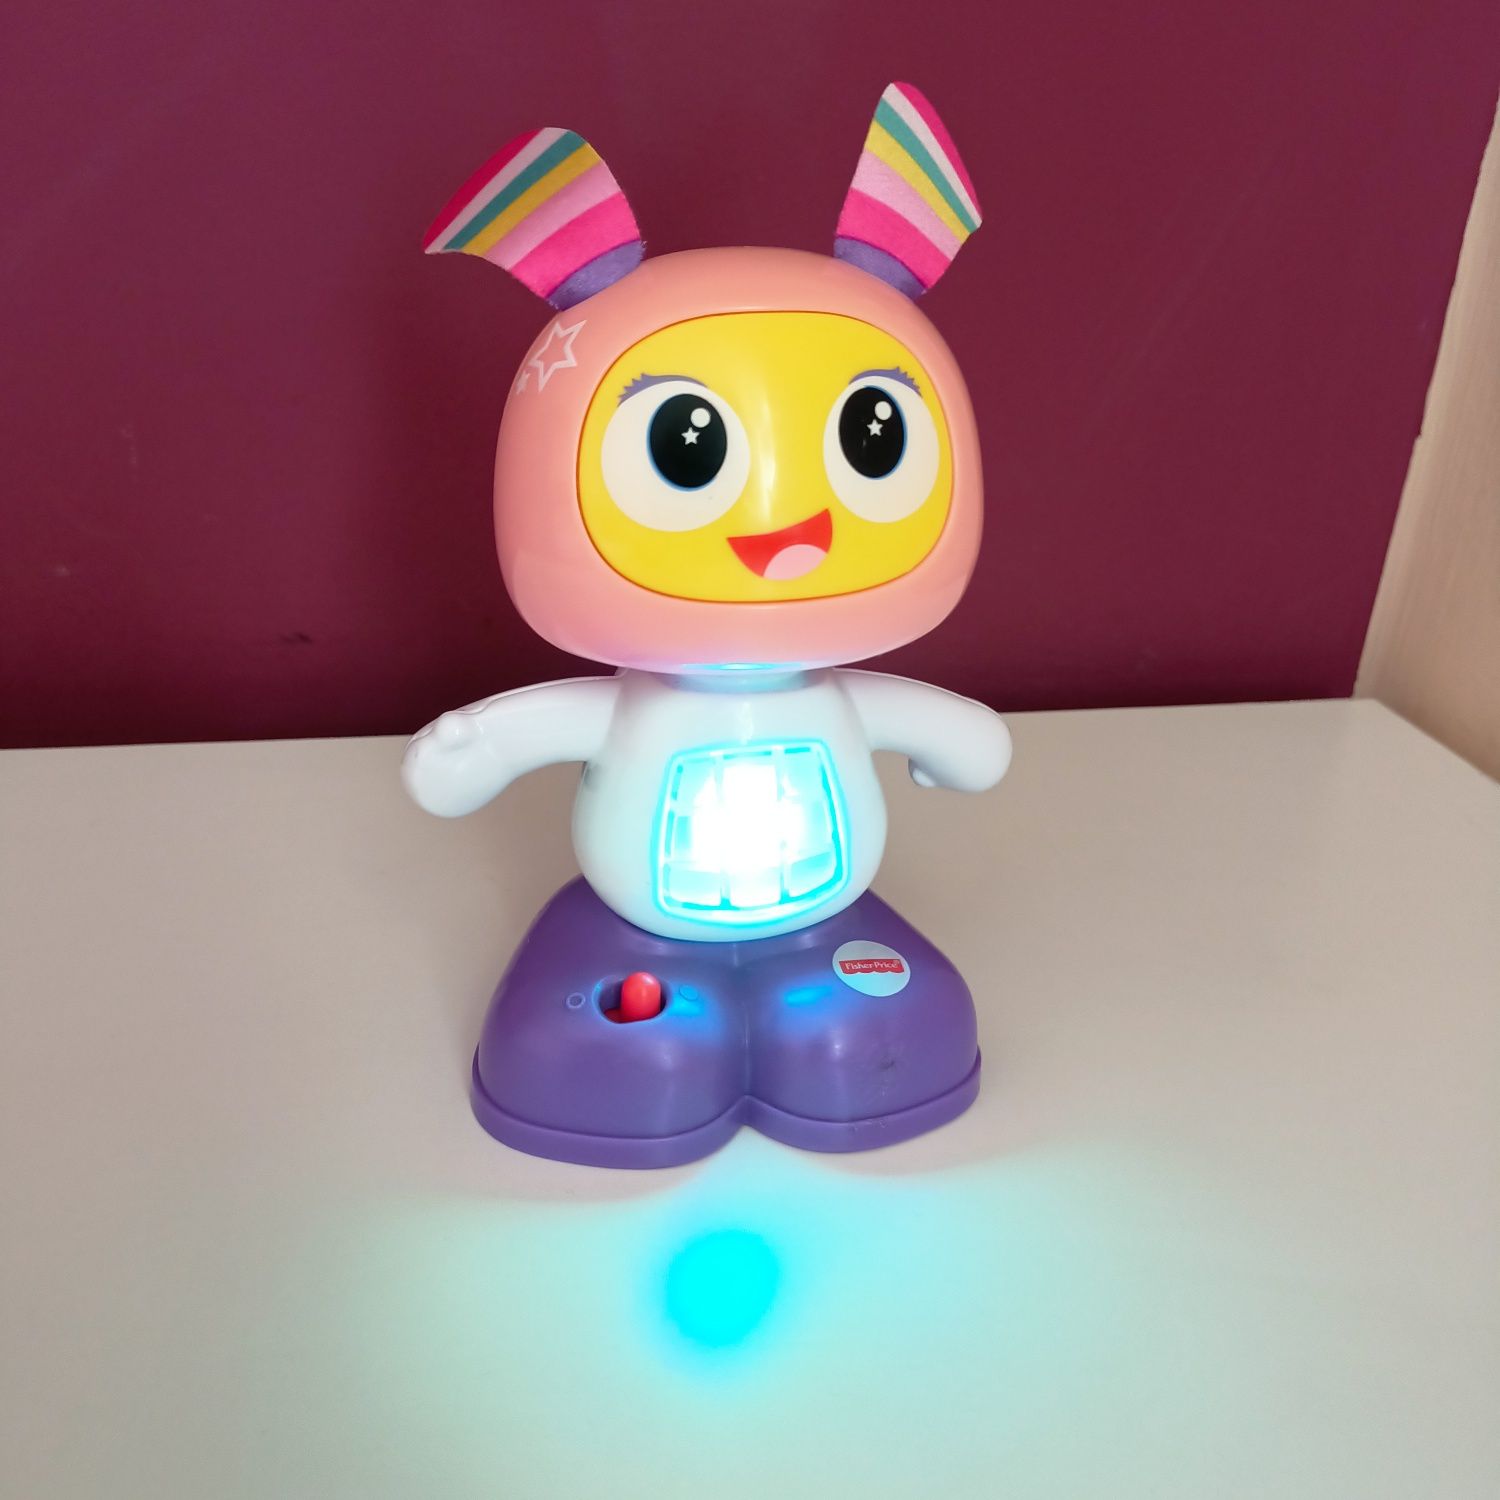 Zabawka interaktywna Bobo robot Fischer Price